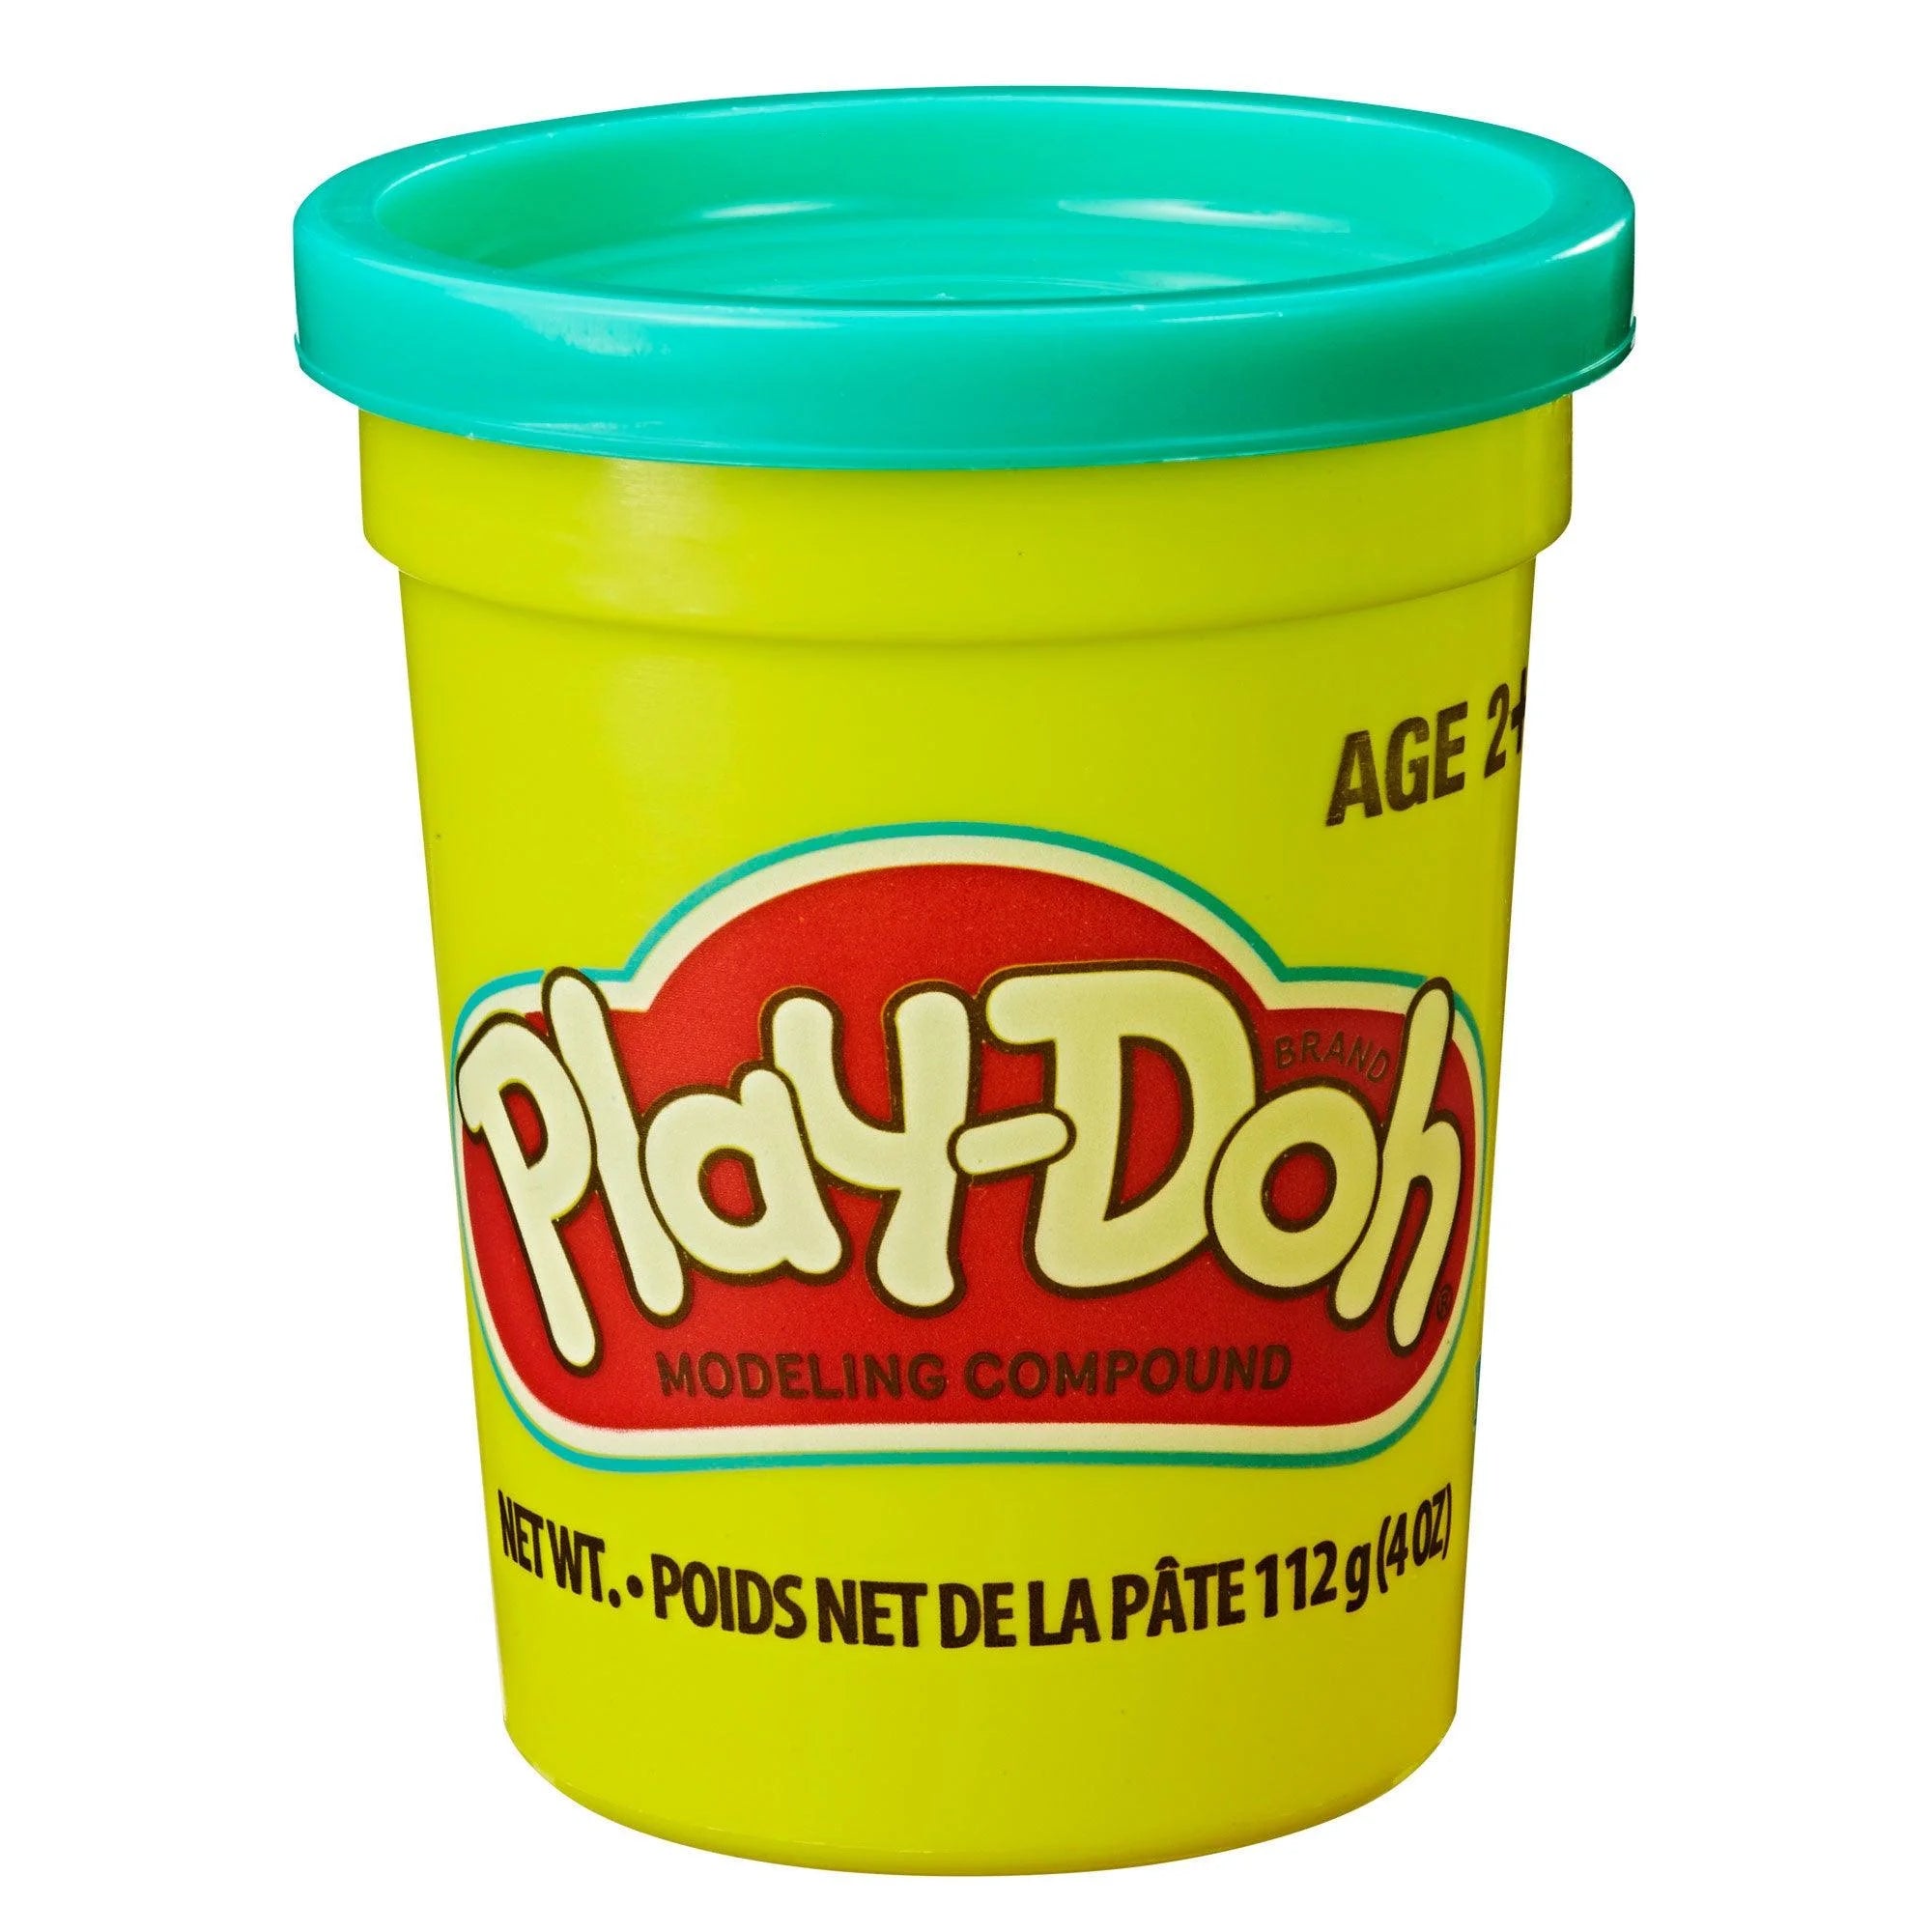 Play-Doh 4oz Single Can Assortment - PDQ